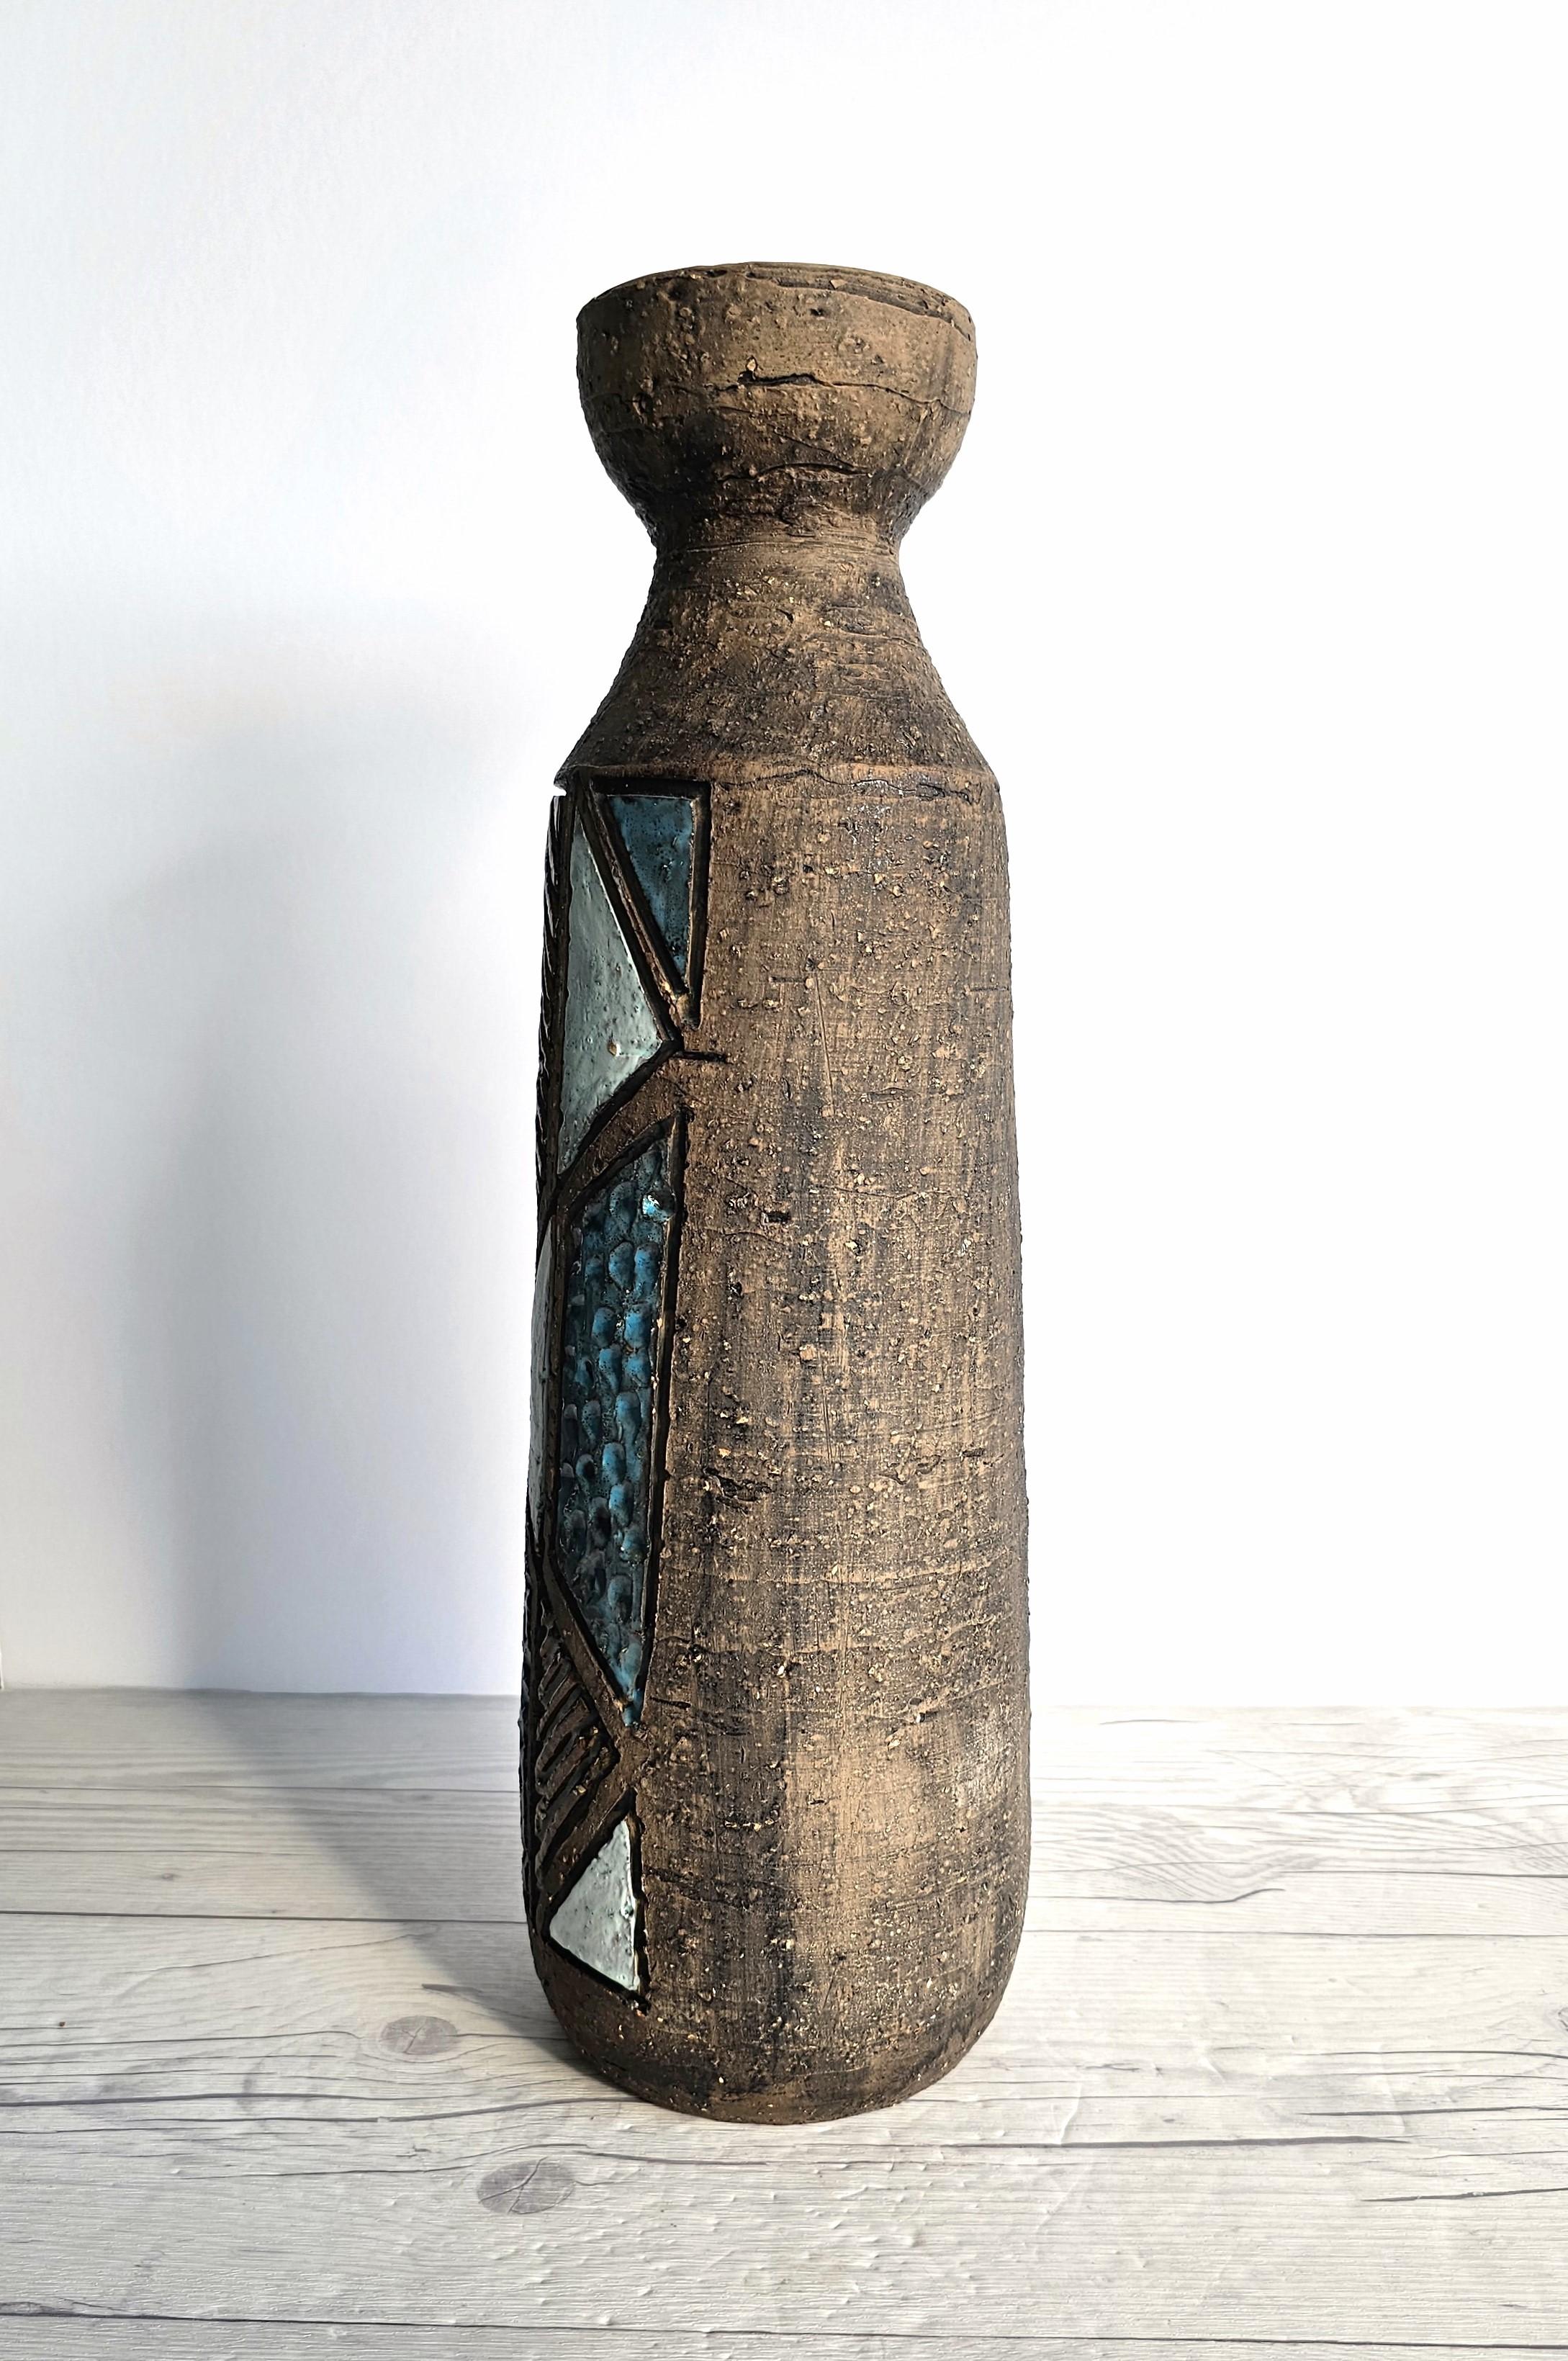 Tilgmans Keramik, Swedish Midcentury Modernist Sgraffito Sculptural Bottle Vase For Sale 4